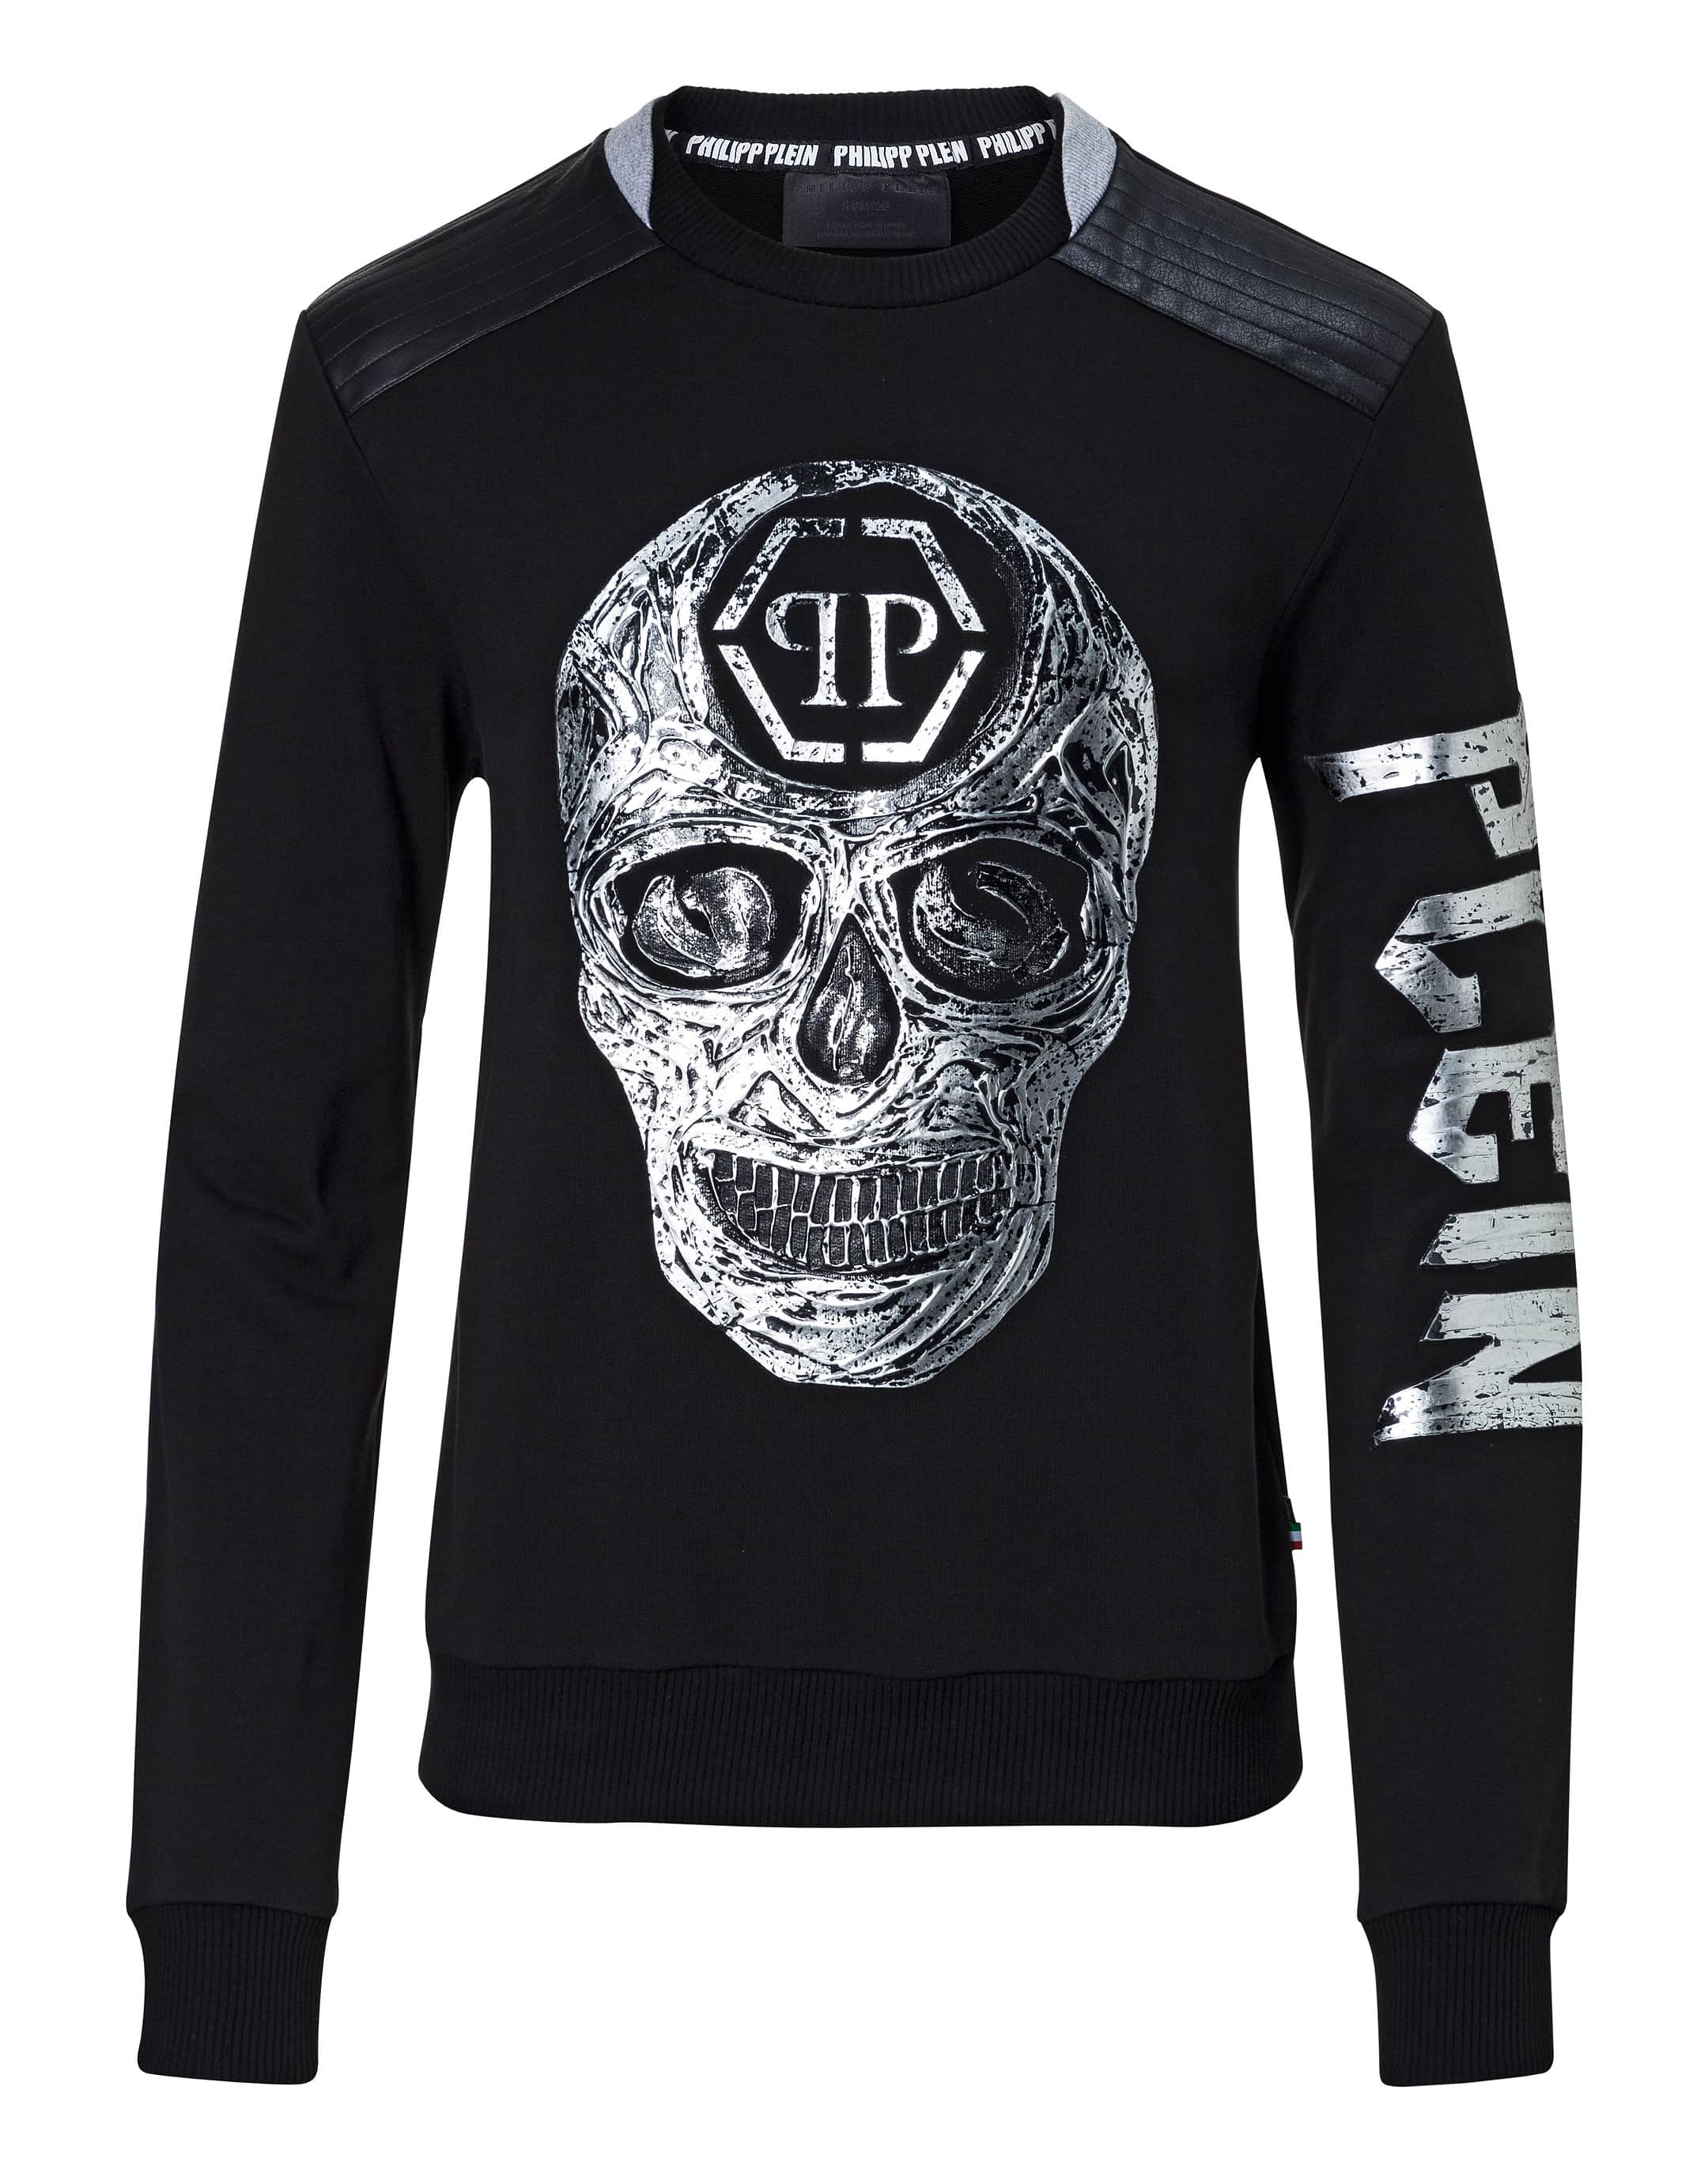 Sweatshirt LS "Handmade skull" | Philipp Plein Outlet